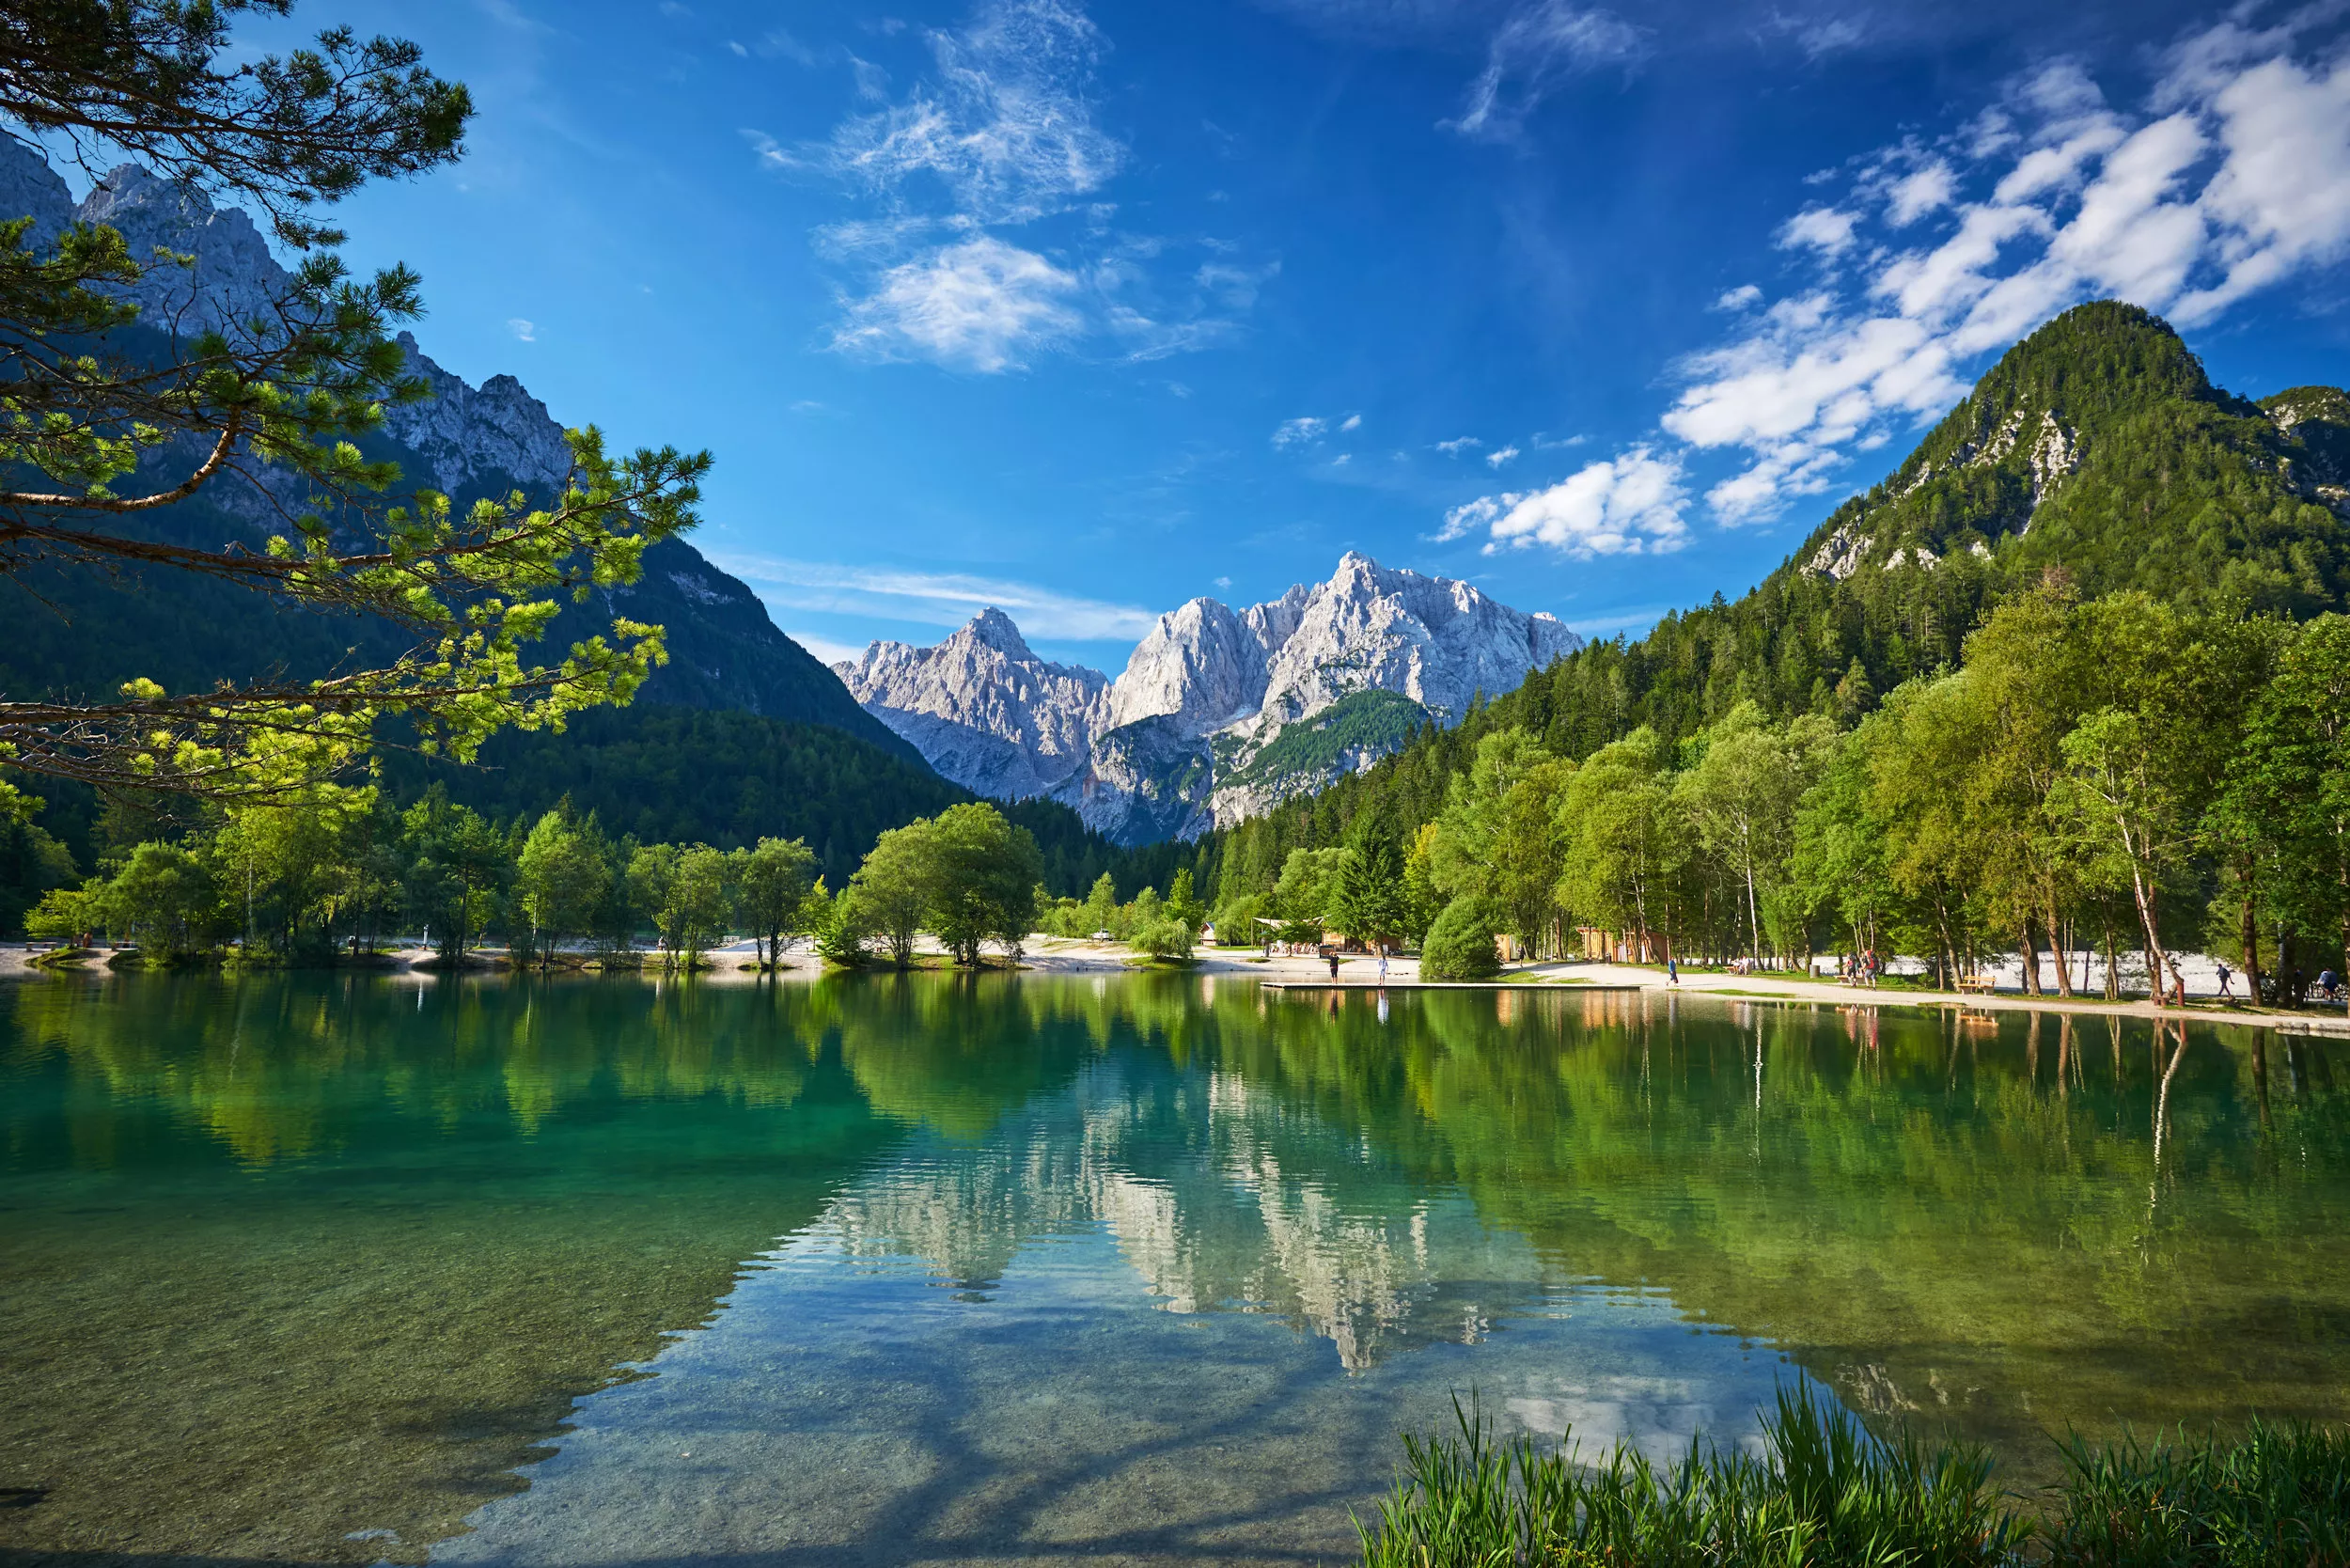 Lake Jasna in Slovenia, Europe | Lakes - Rated 3.9